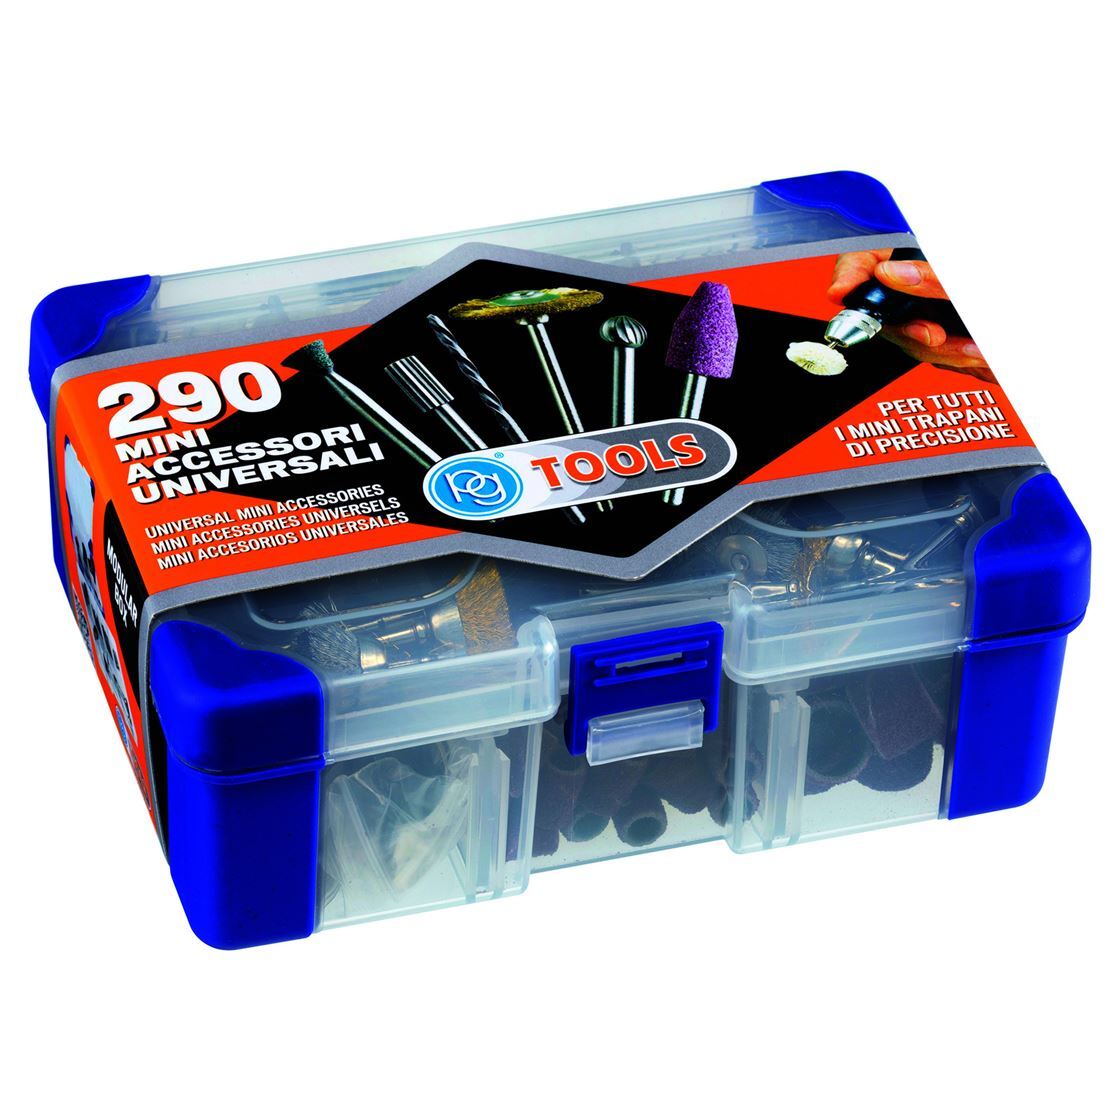 Mini Rotary Tool Kit PG Mini Universal 290 piece Precision Accessory kit 